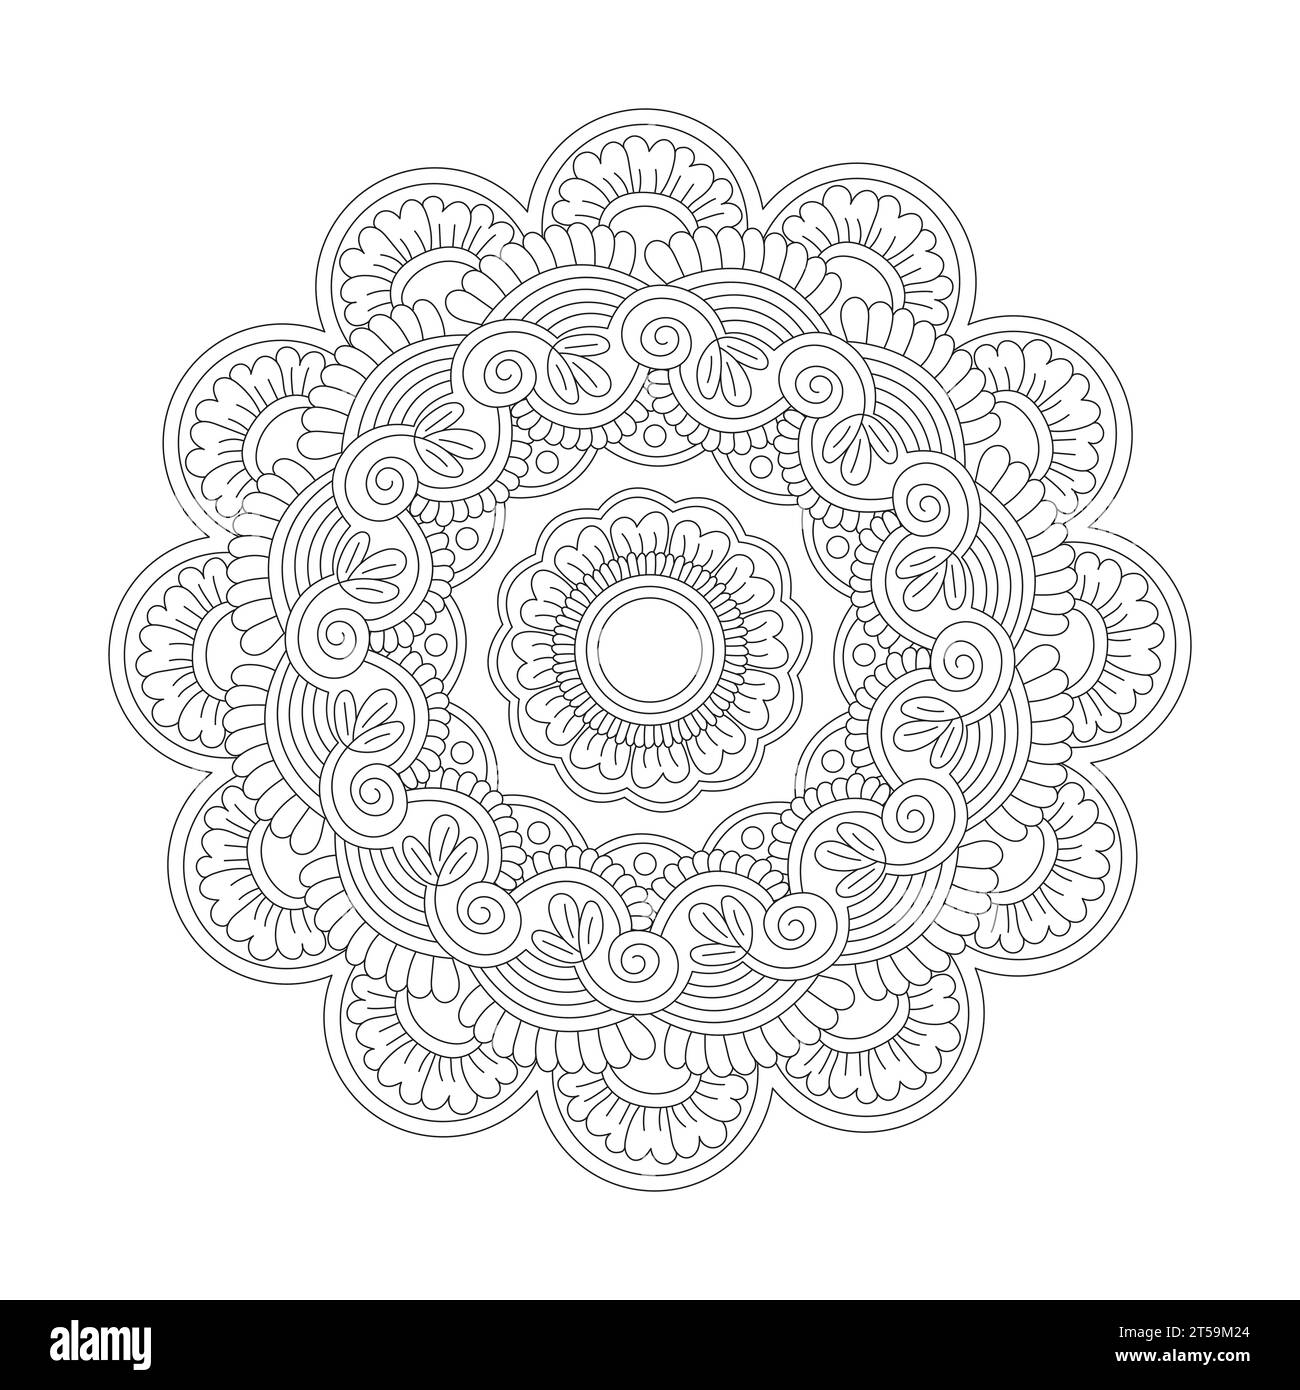 Coloring page No.1737 - Calm and zen Art Mandala